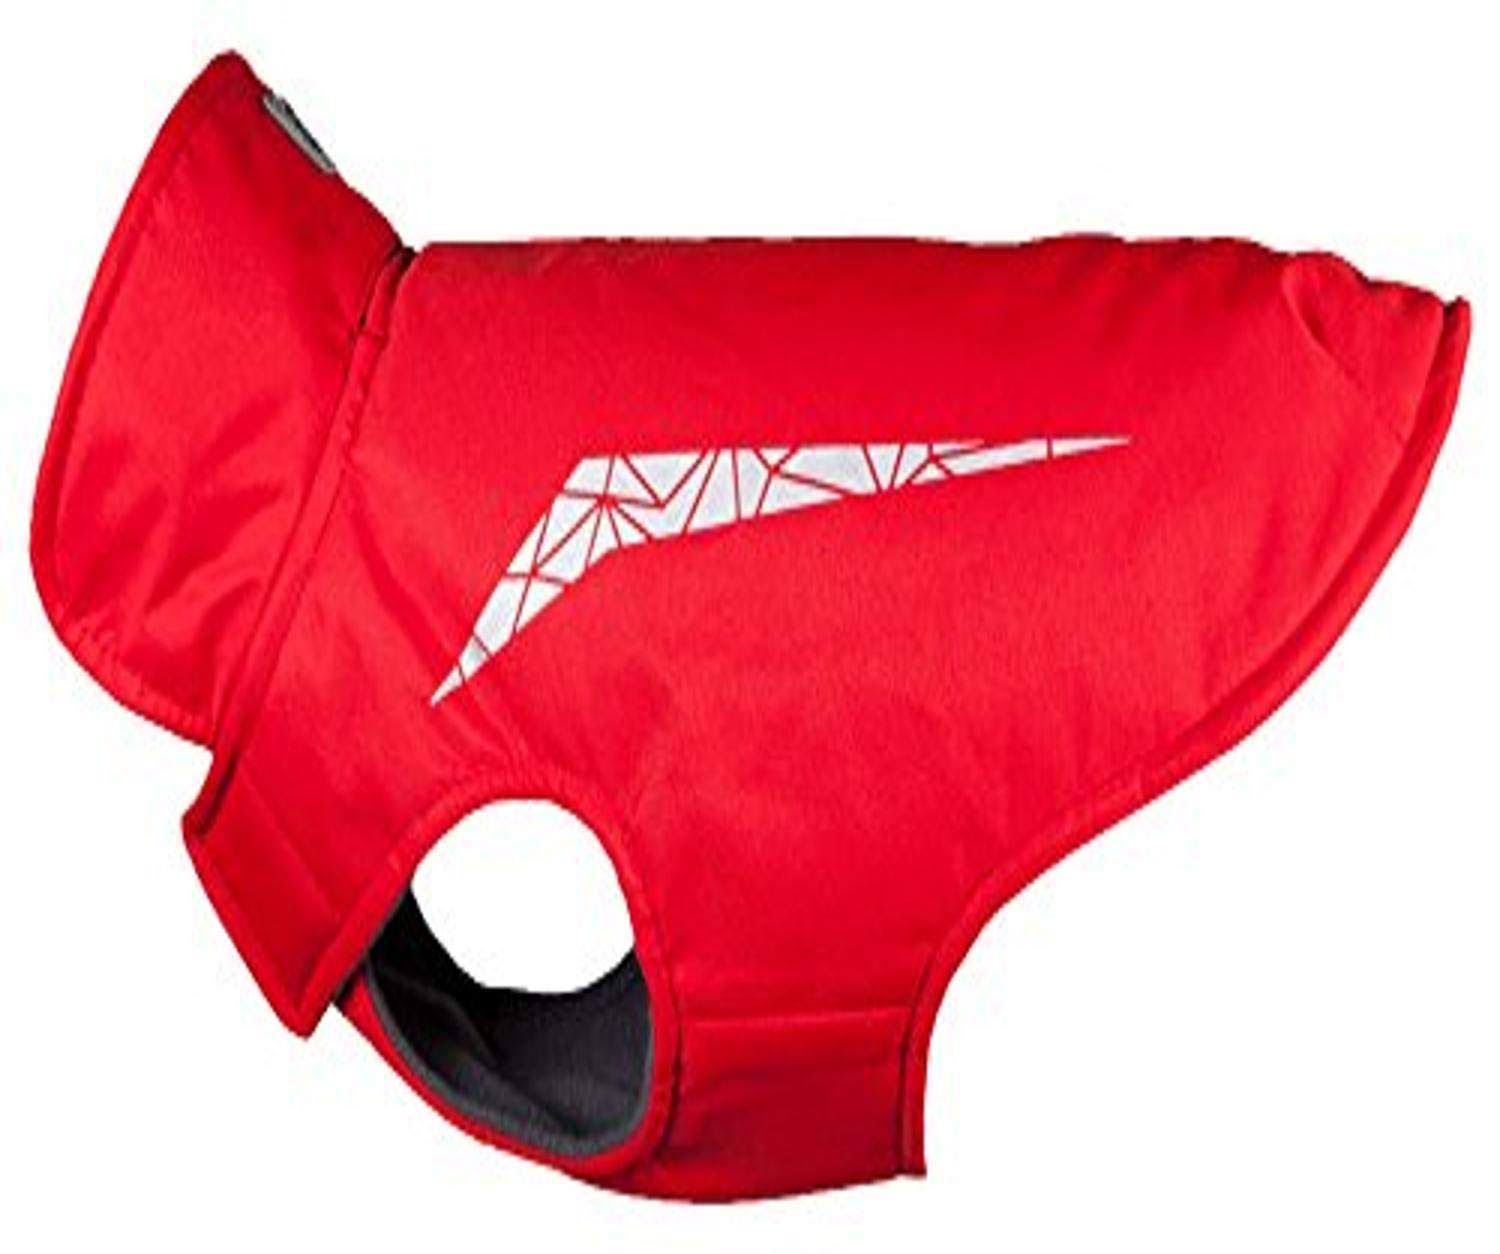 Cascade Dog Coat - Red - Size 10 Long